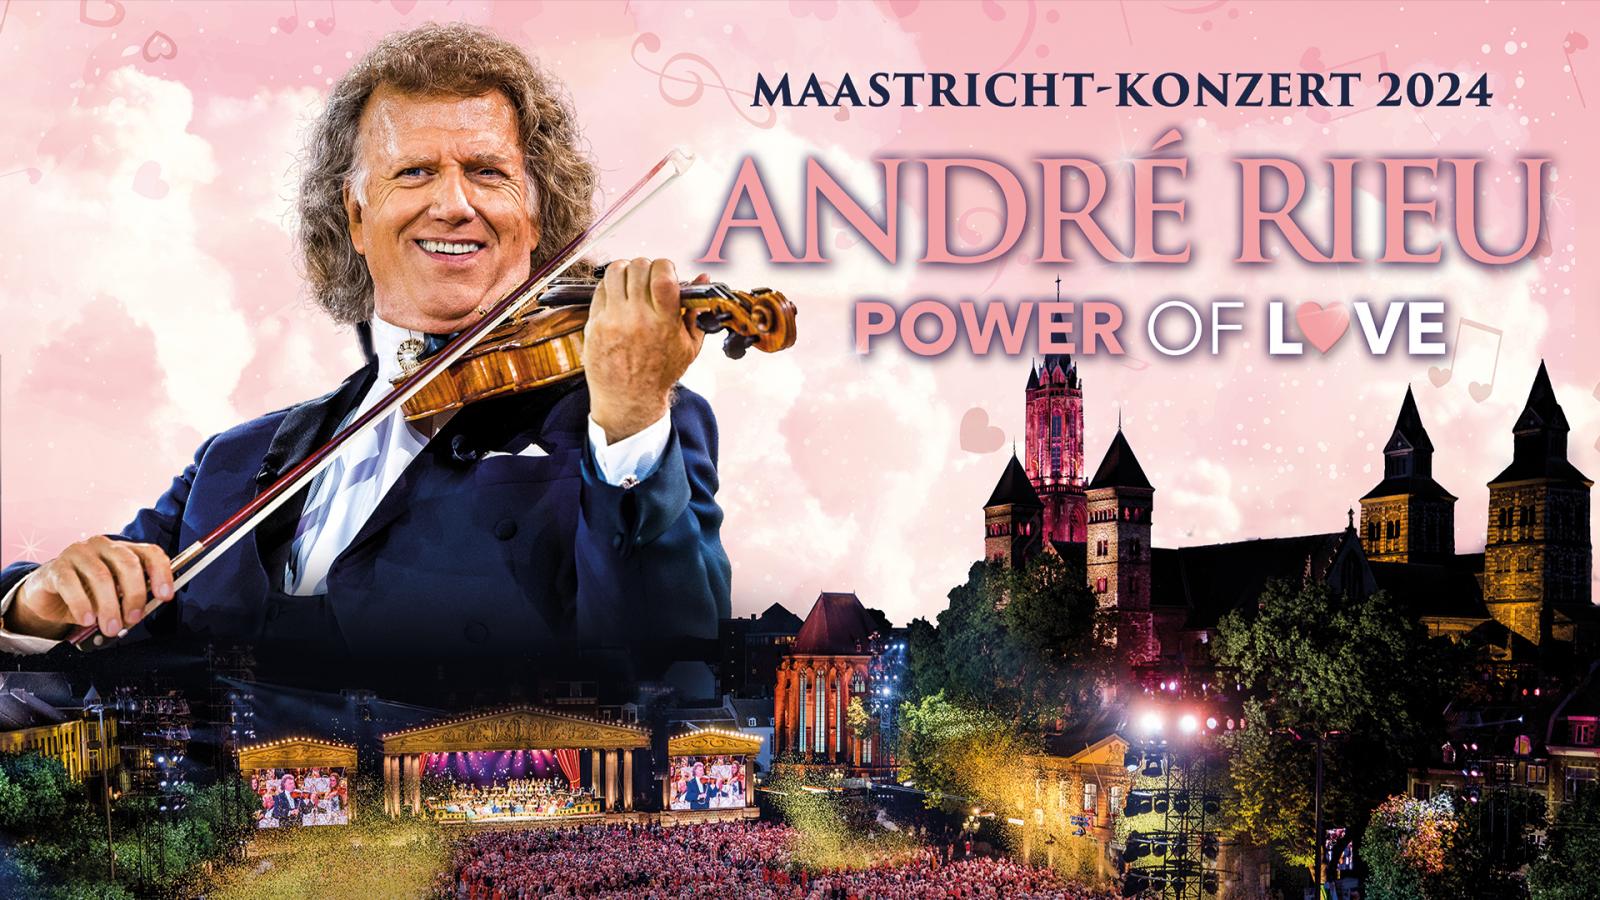 SPECIAL: André Rieus Maastricht-Konzert 2024: Power of Love 